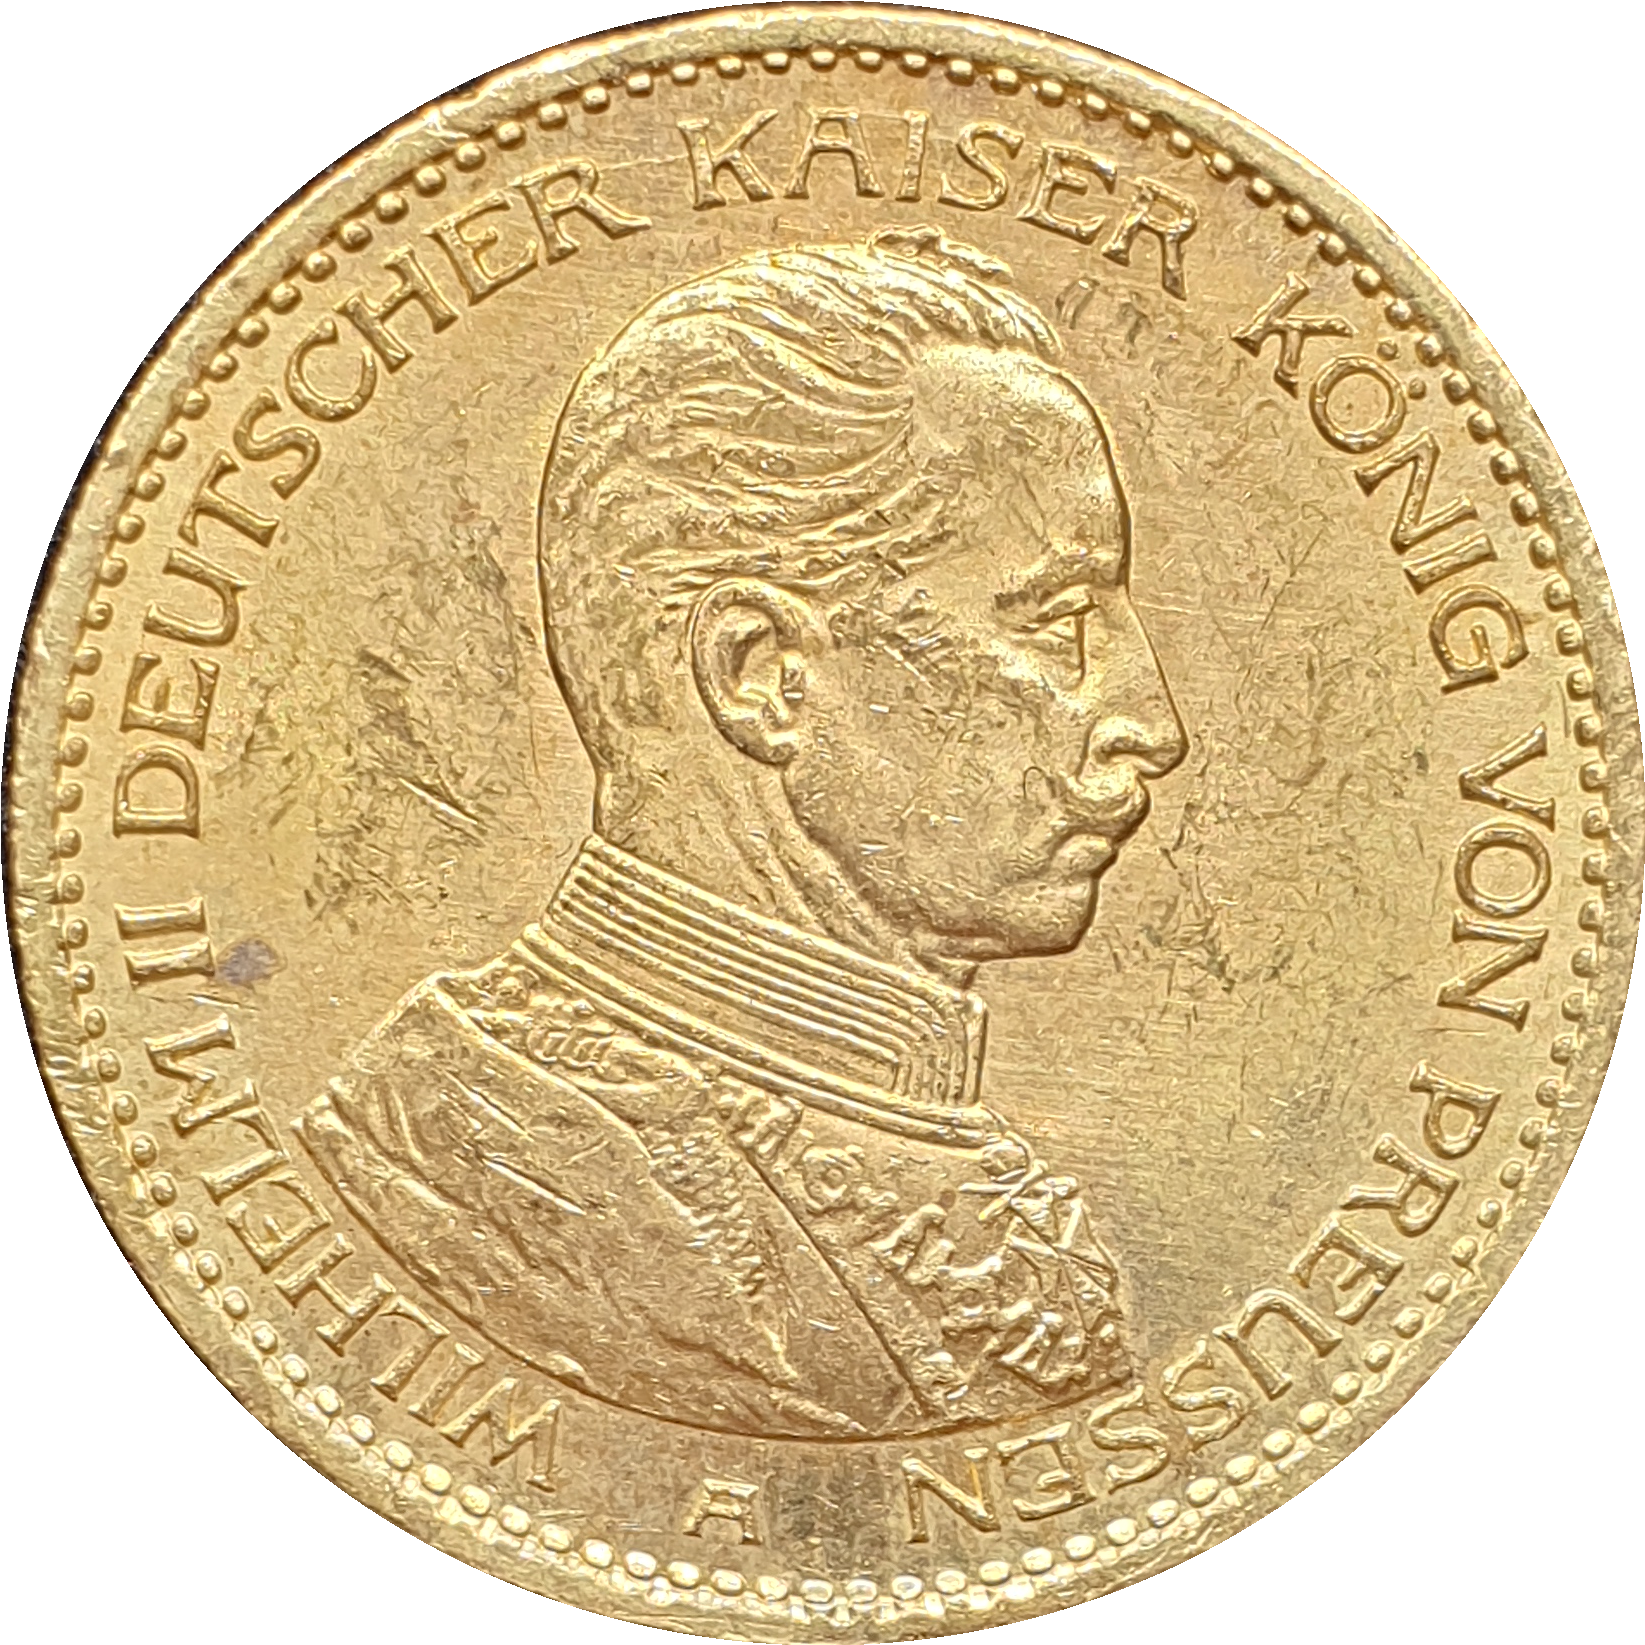 Germany - Prussia - 20 mark - 1913 - Wilhelm II